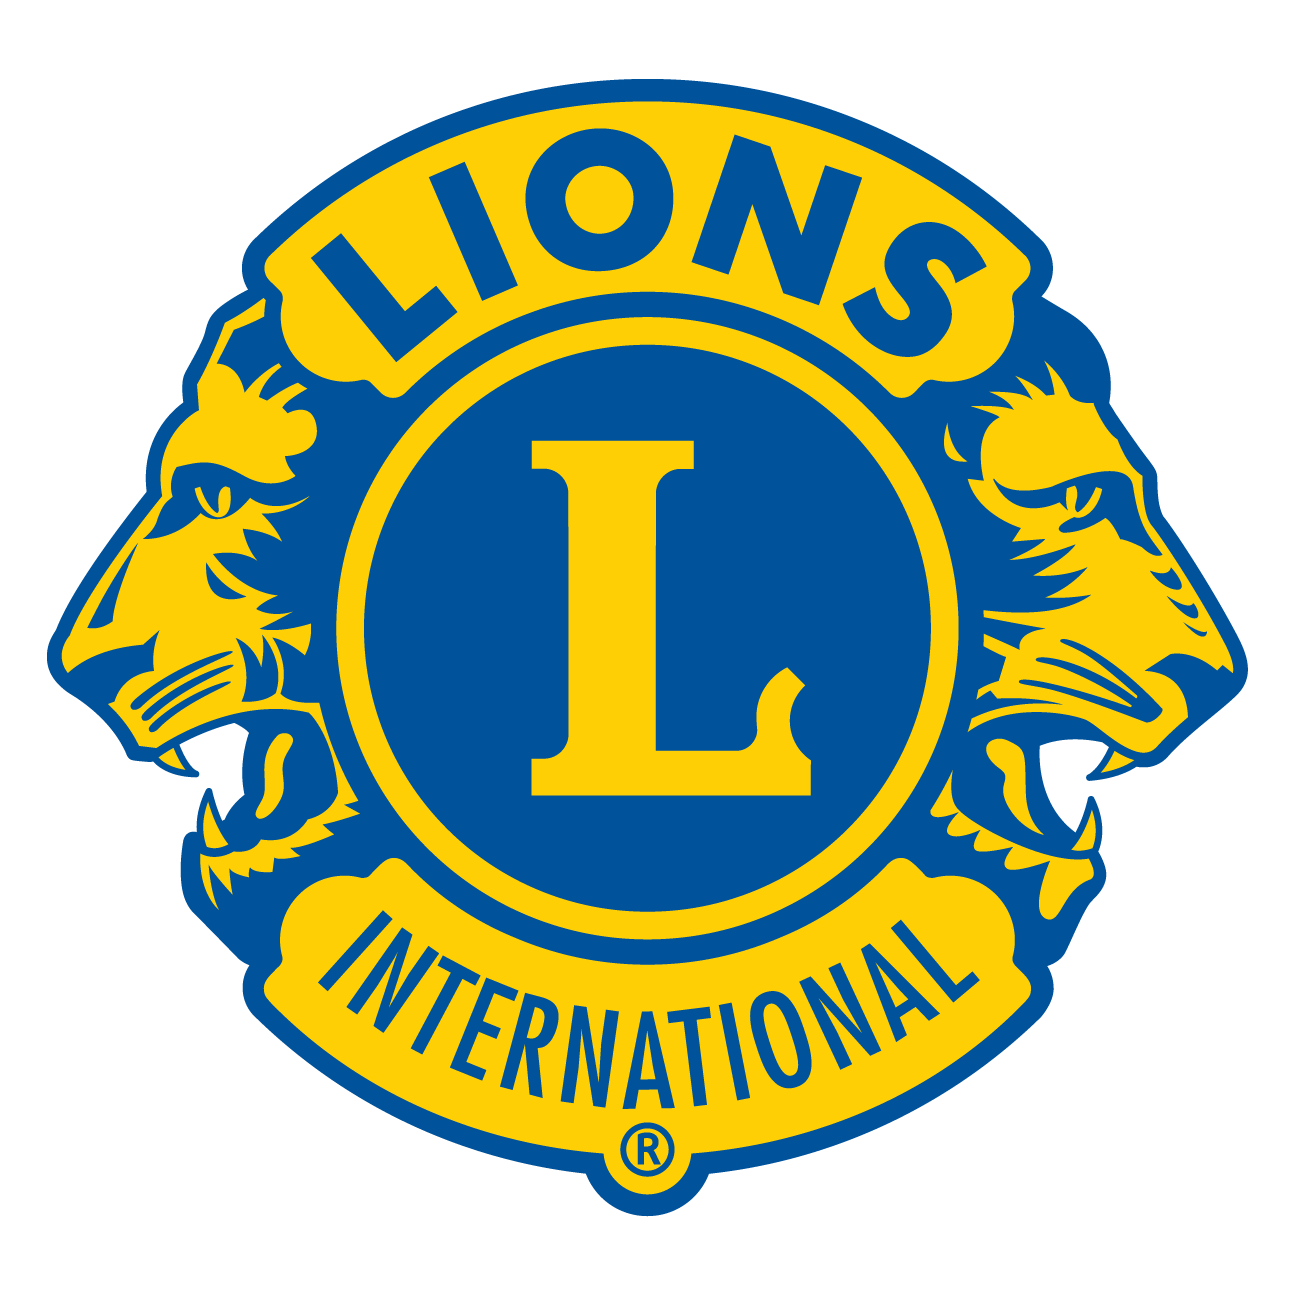 Lions International